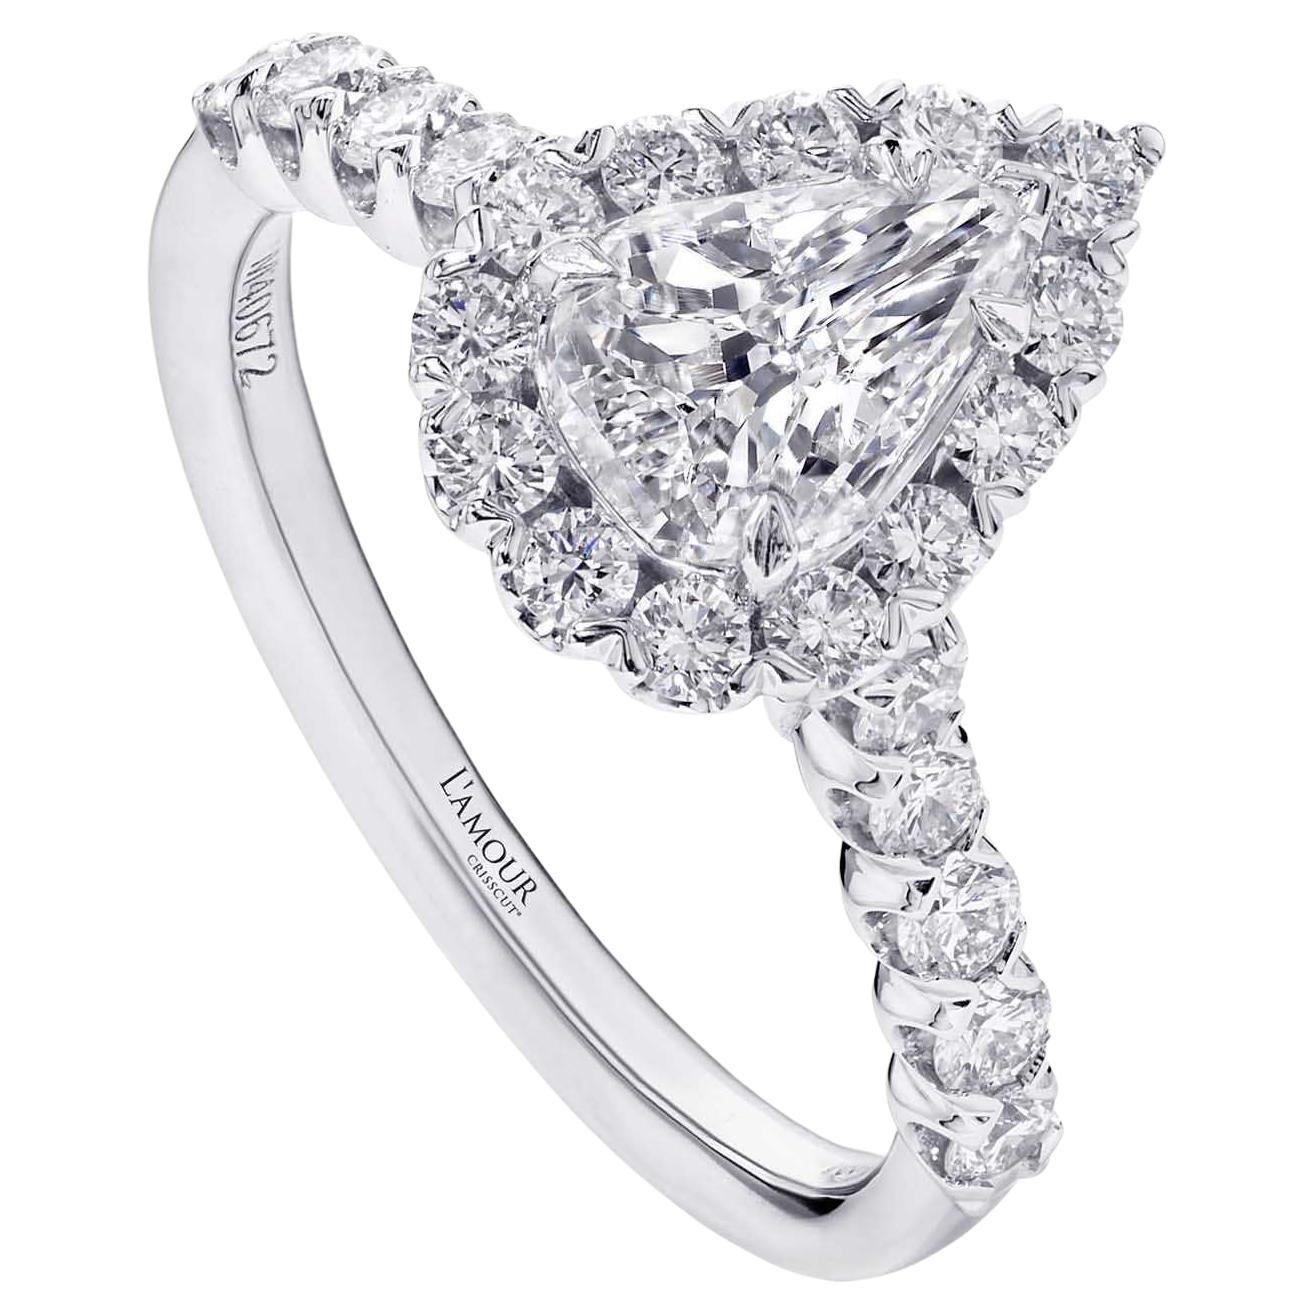 Christopher Designs L'Amour Crisscut Pear Shape Diamond GIA Engagement Ring For Sale